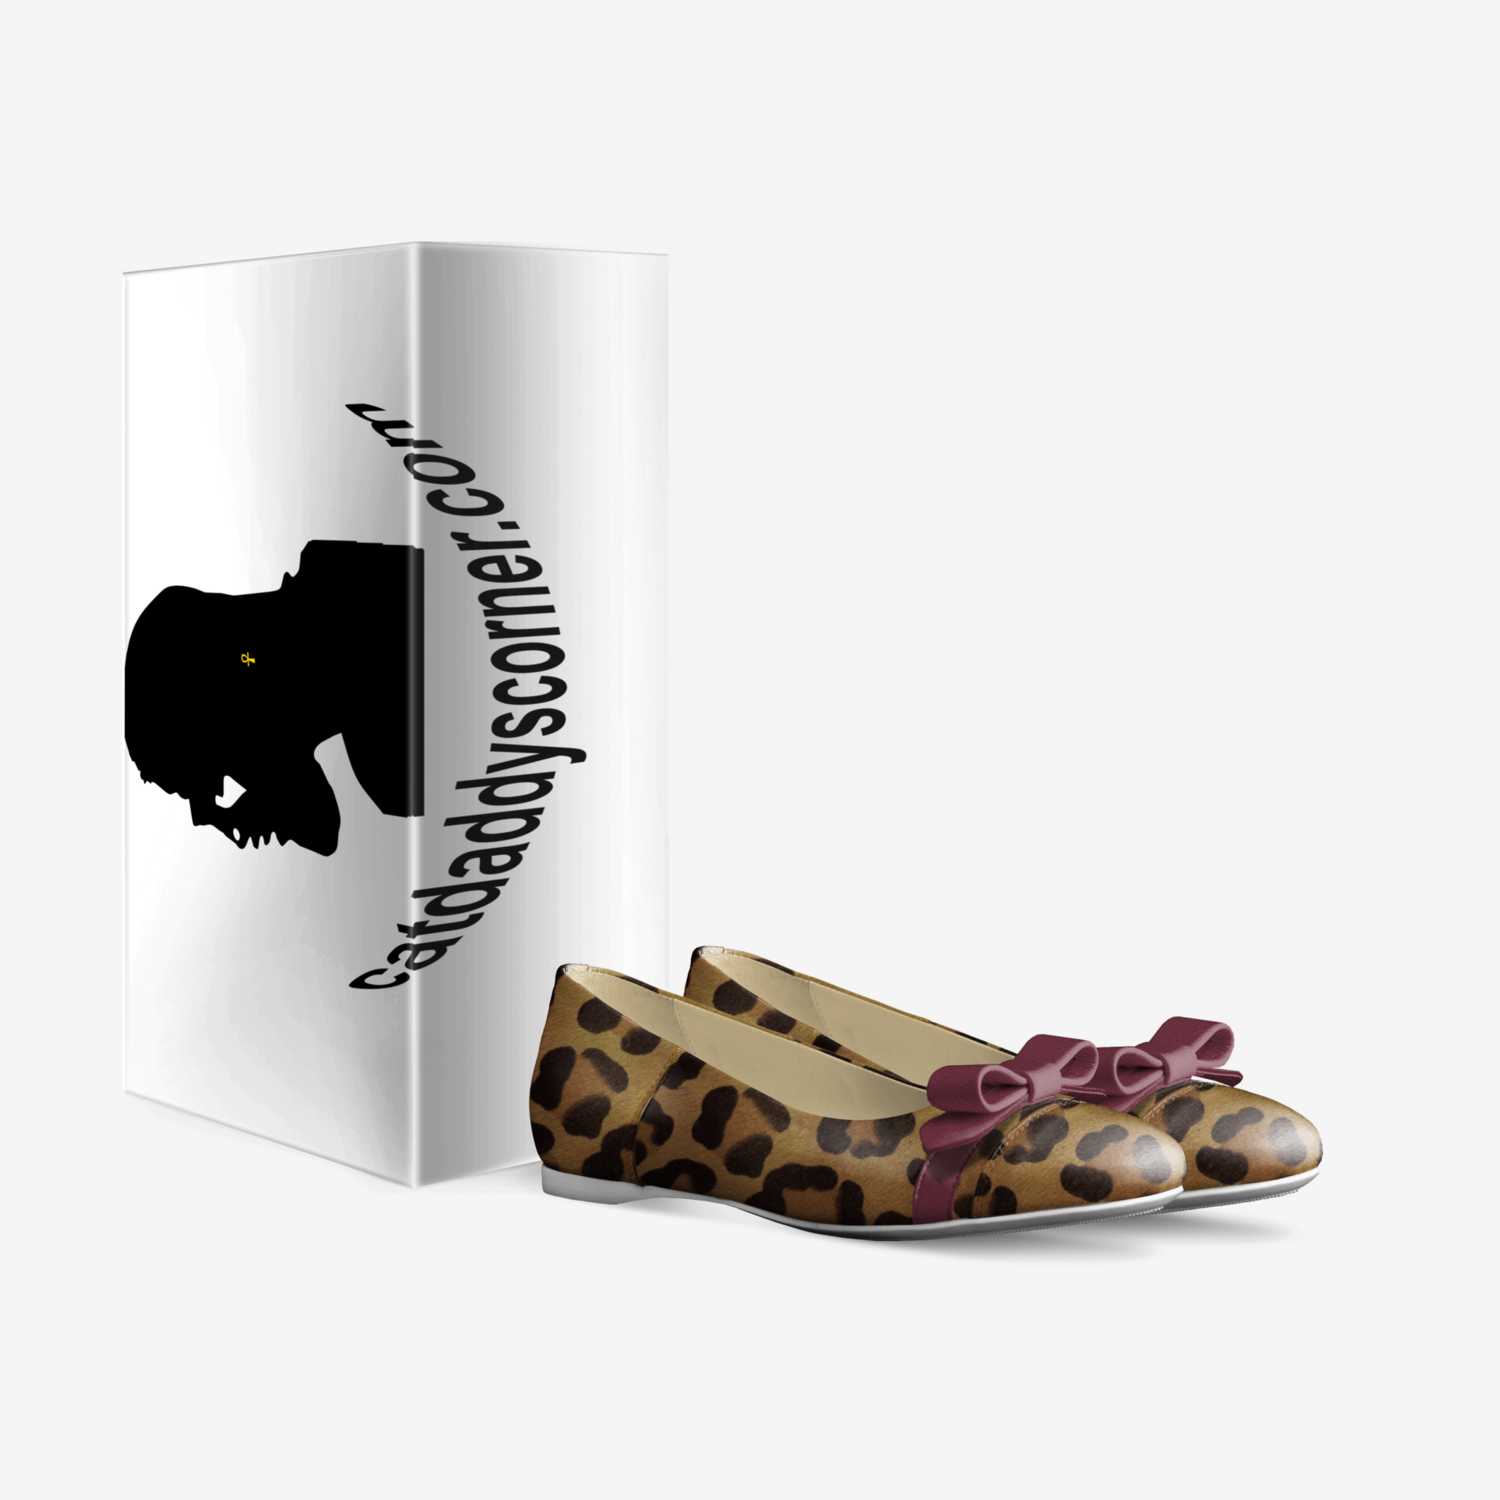 Sheba custom made in Italy shoes by Scott Thomas | Box view